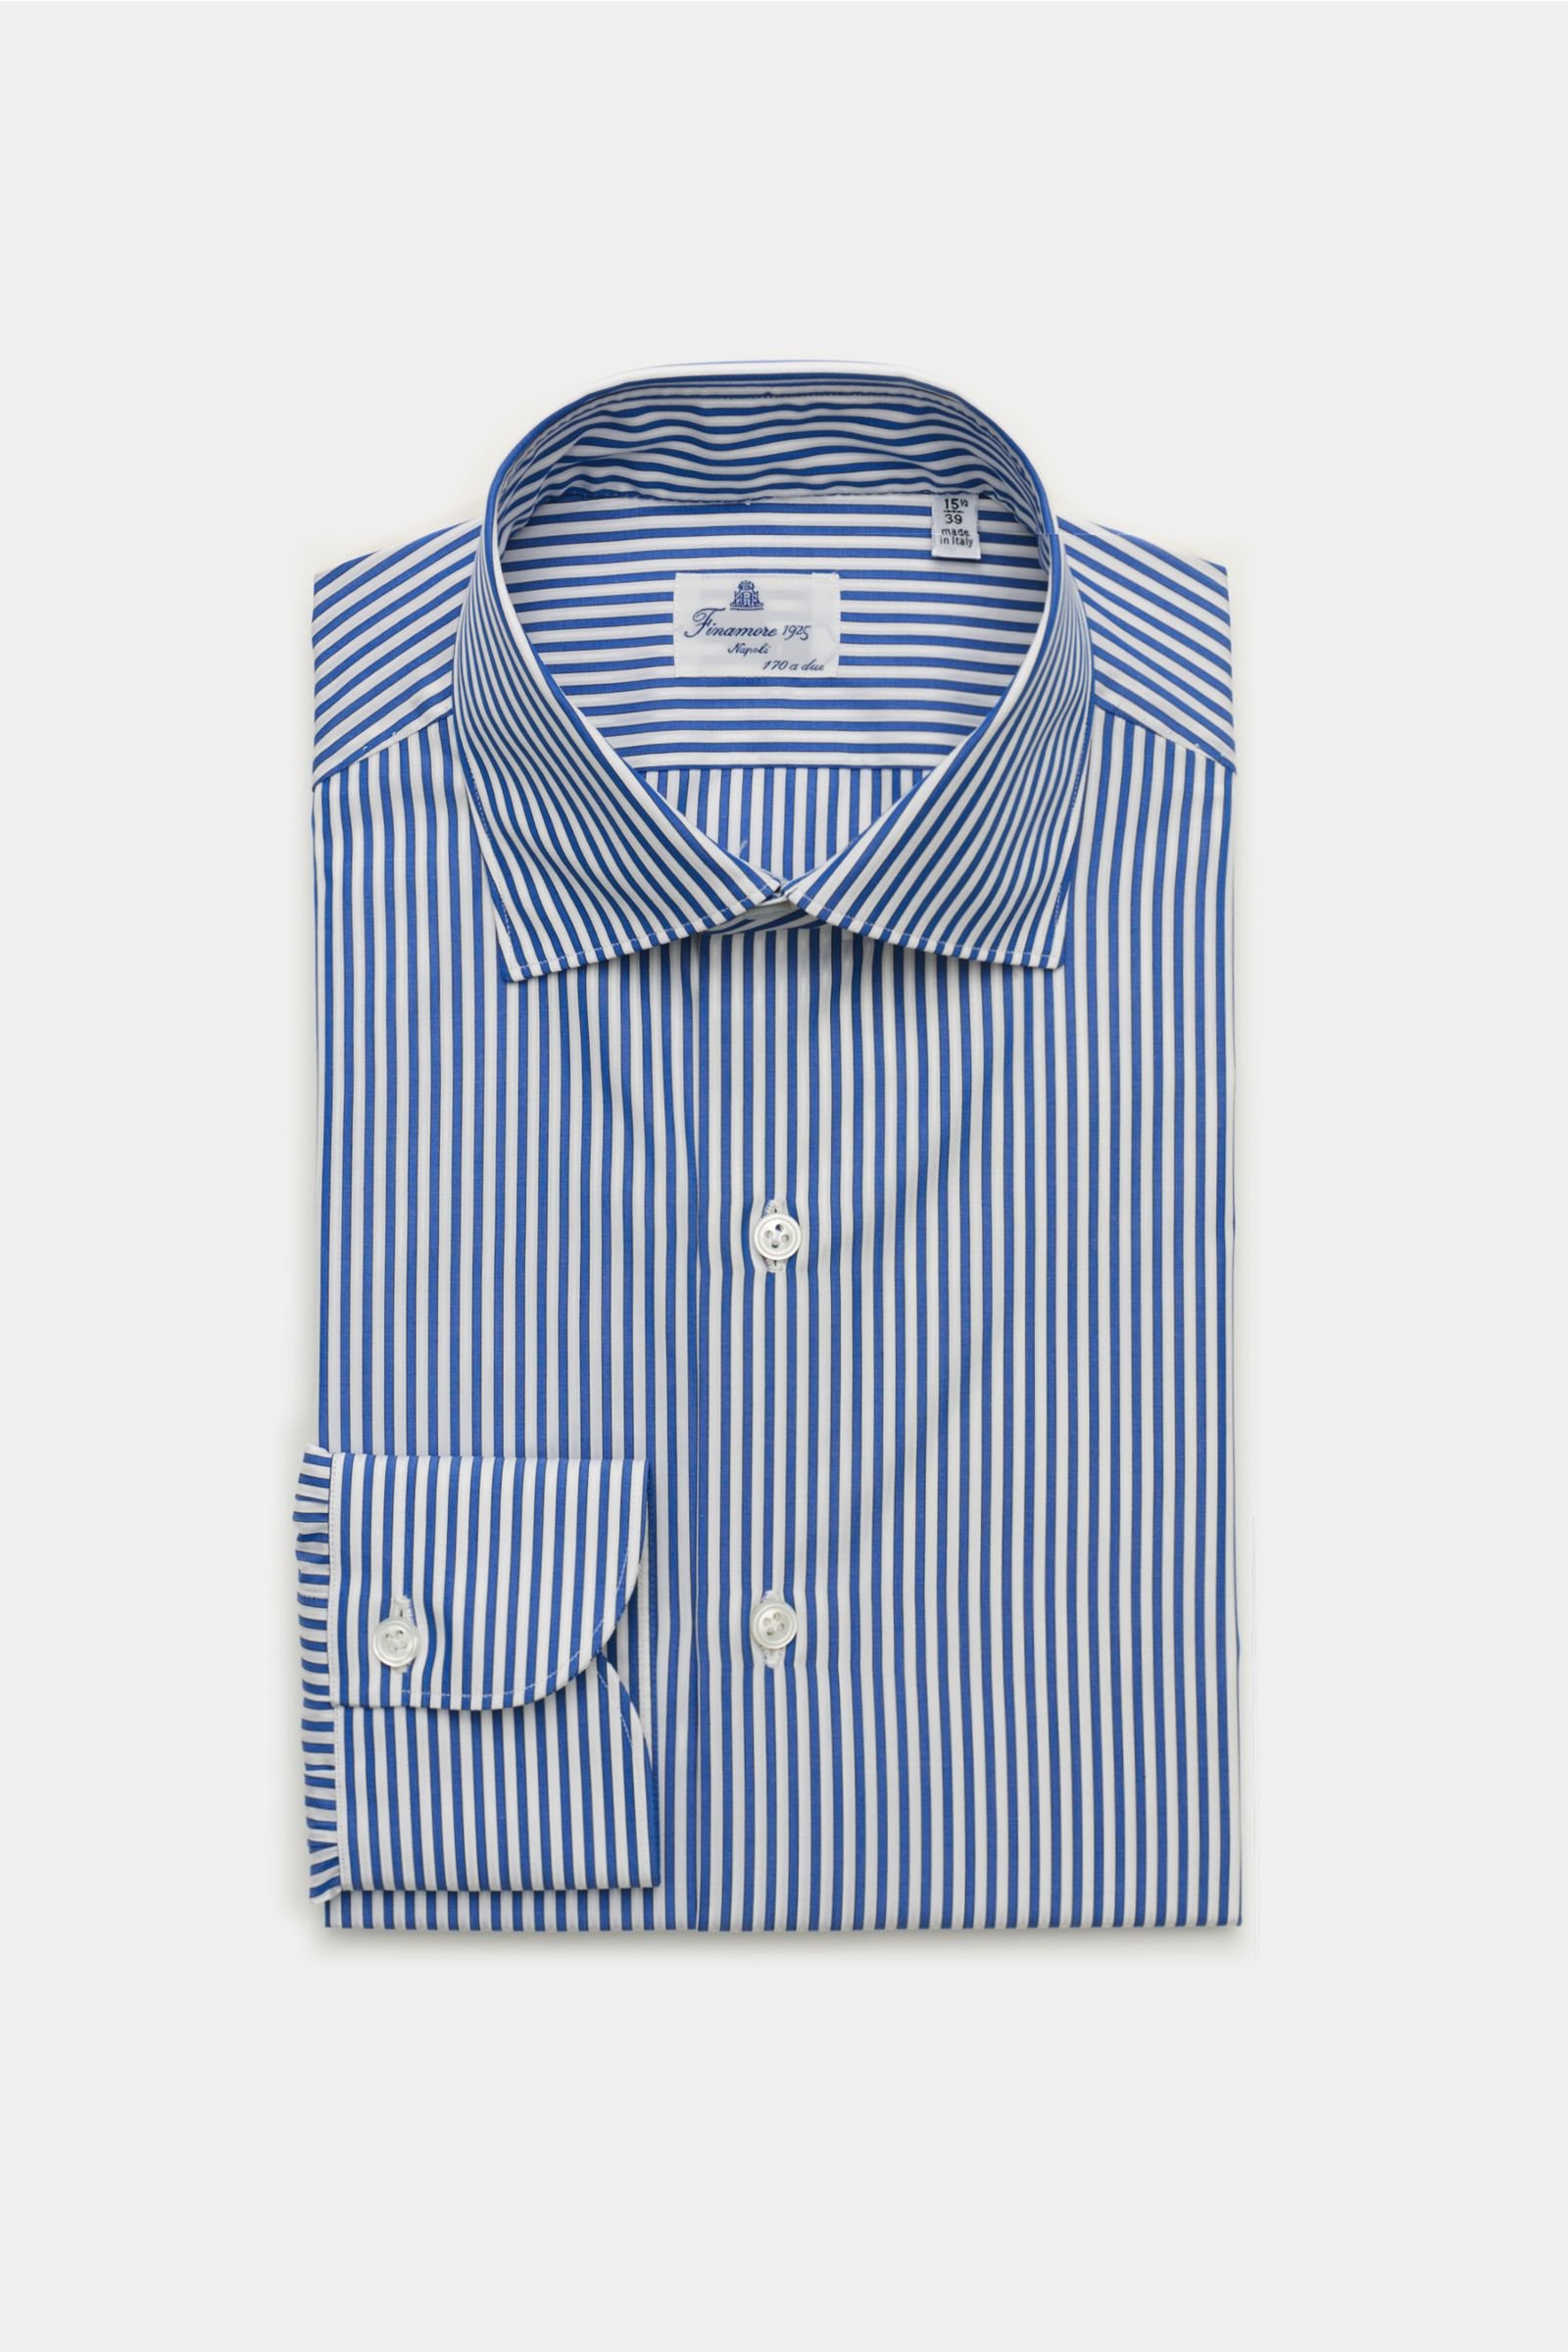 Business shirt 'Luigi Milano' shark collar smoky blue/white striped